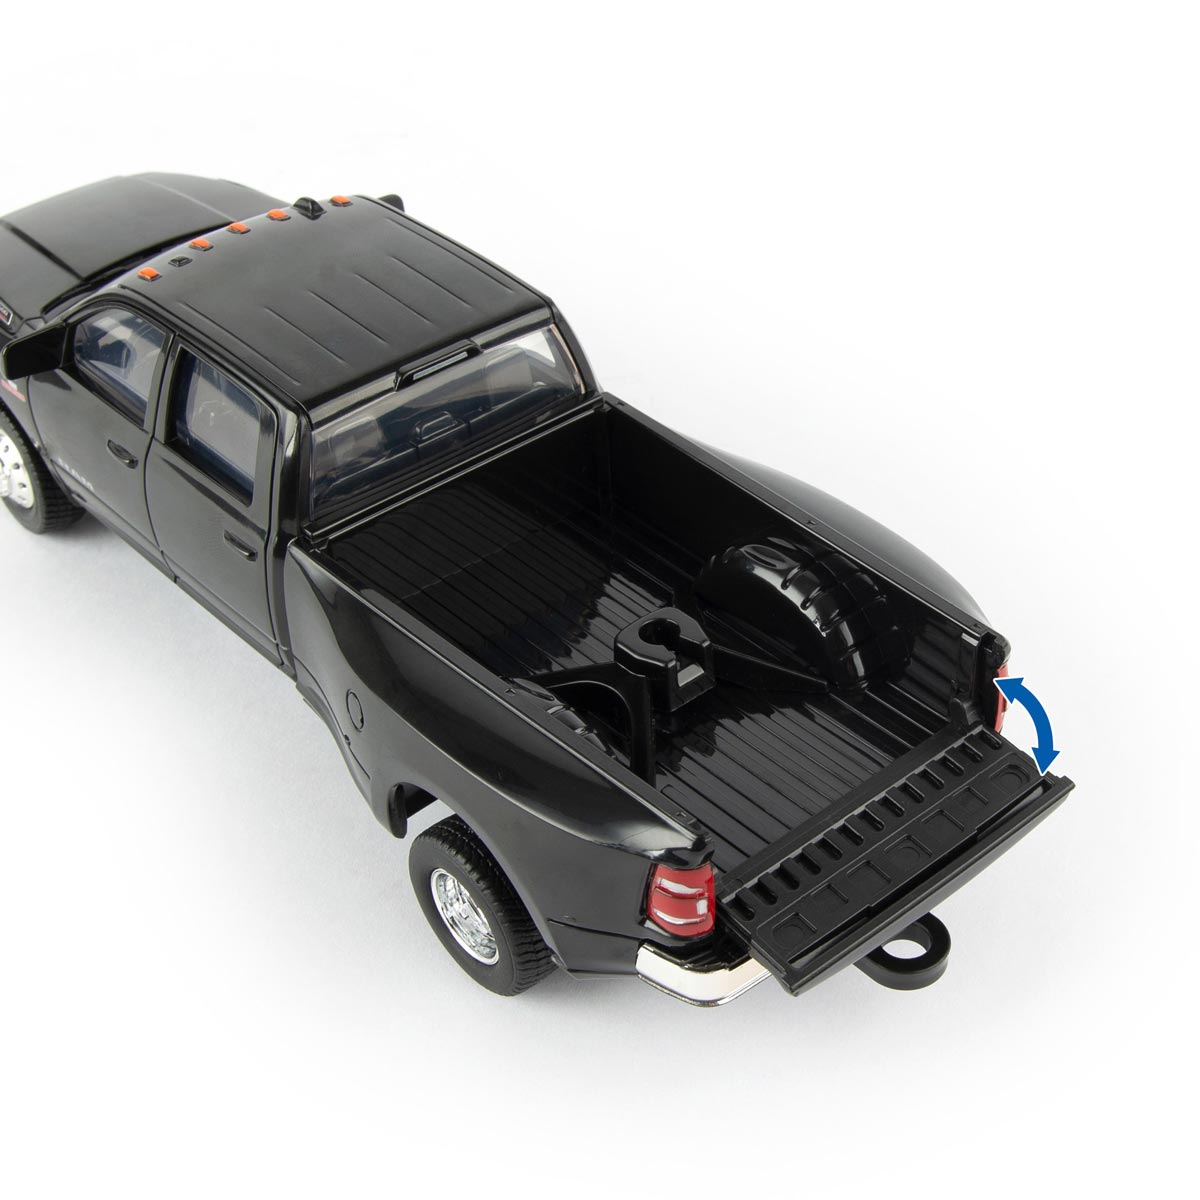 Dodge RAM 1500 with Gooseneck Trailer + Case SV340B Skid Steer